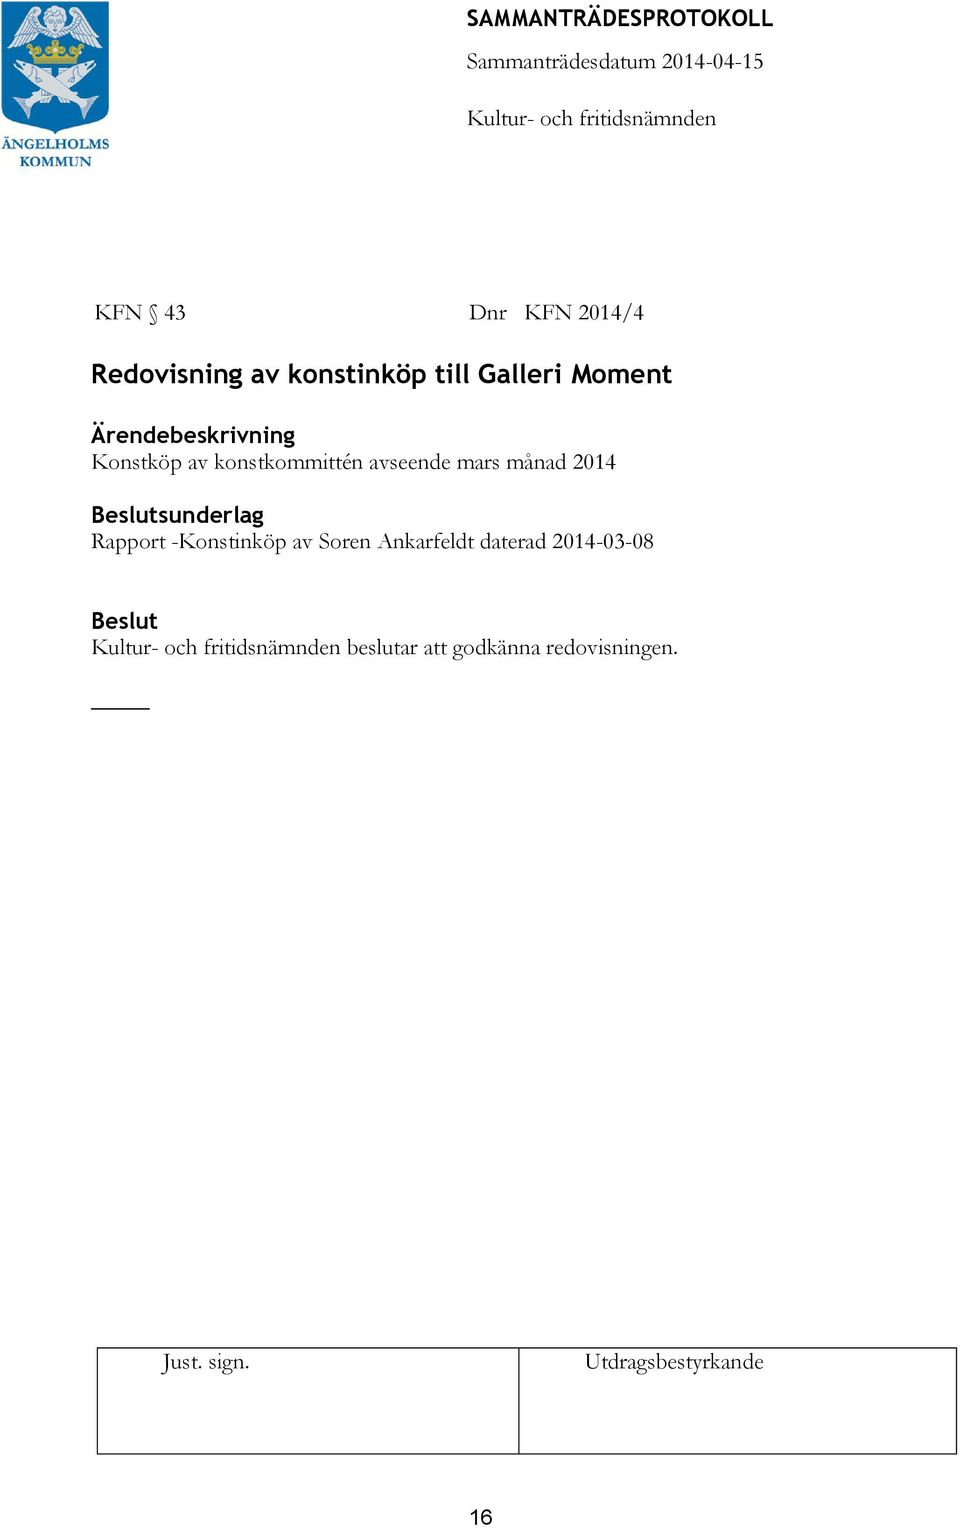 månad 2014 sunderlag Rapport -Konstinköp av Soren